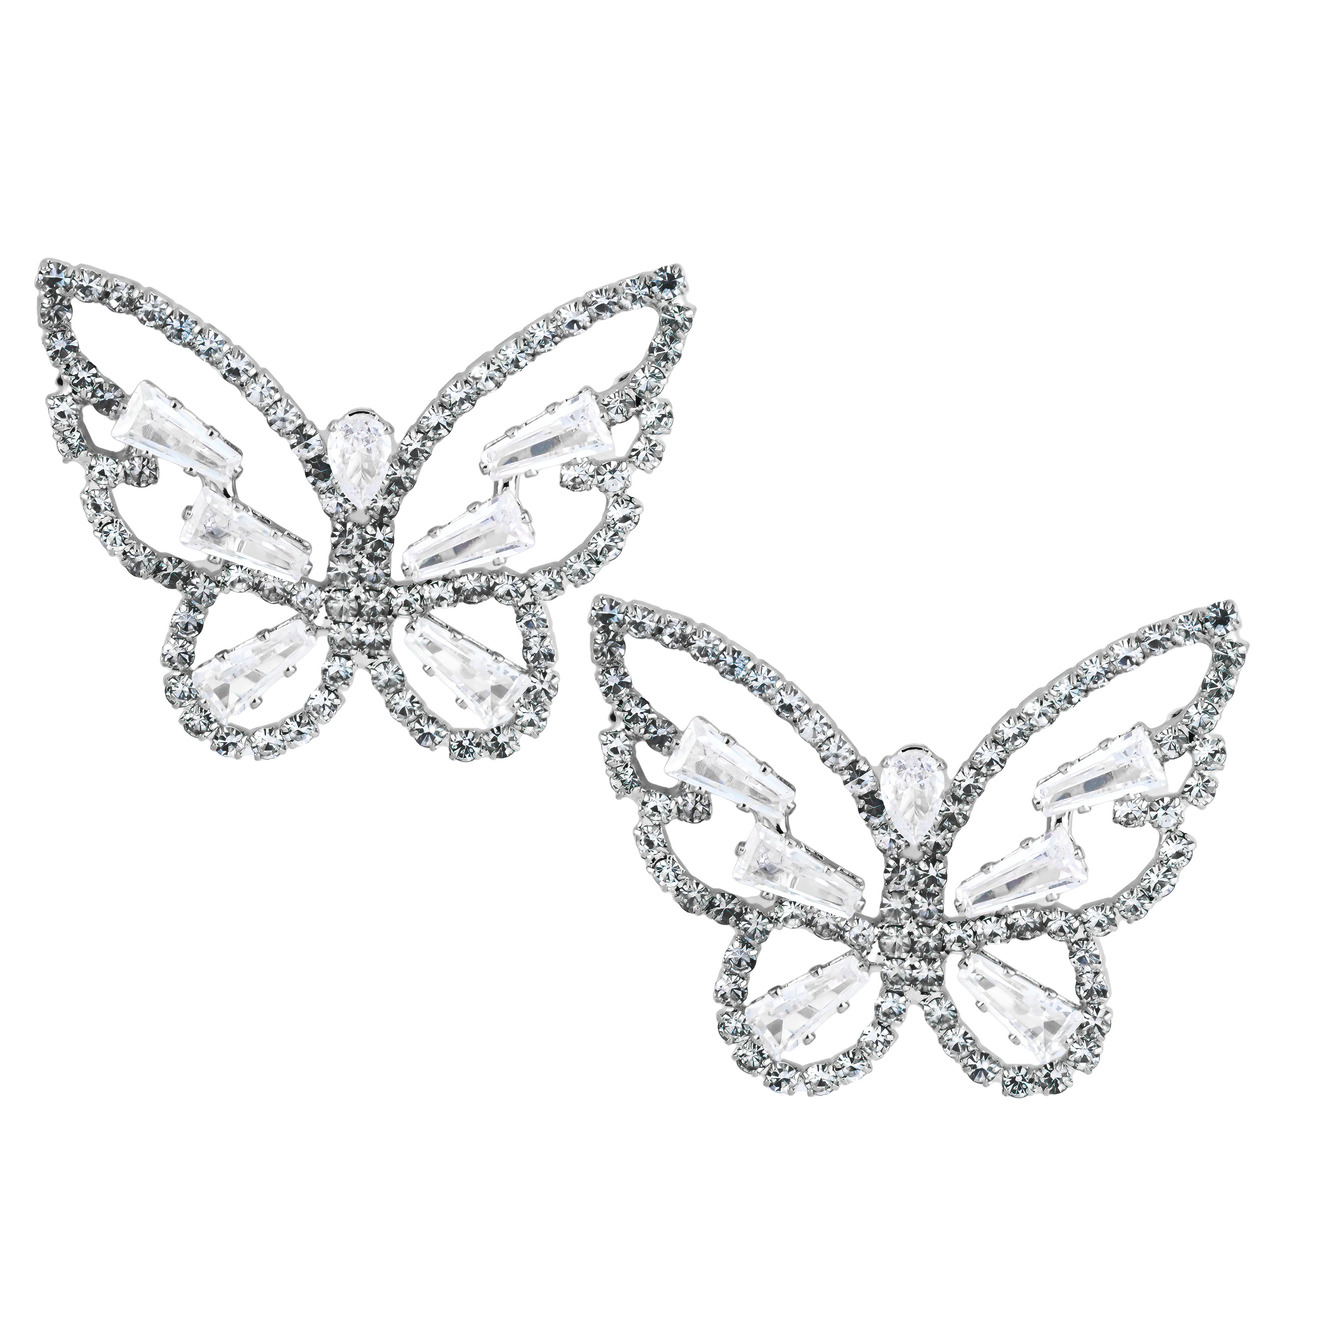 Herald Percy Серебристые серьги-бабочки с кристаллами herald percy серебристые серьги с белыми кристаллами